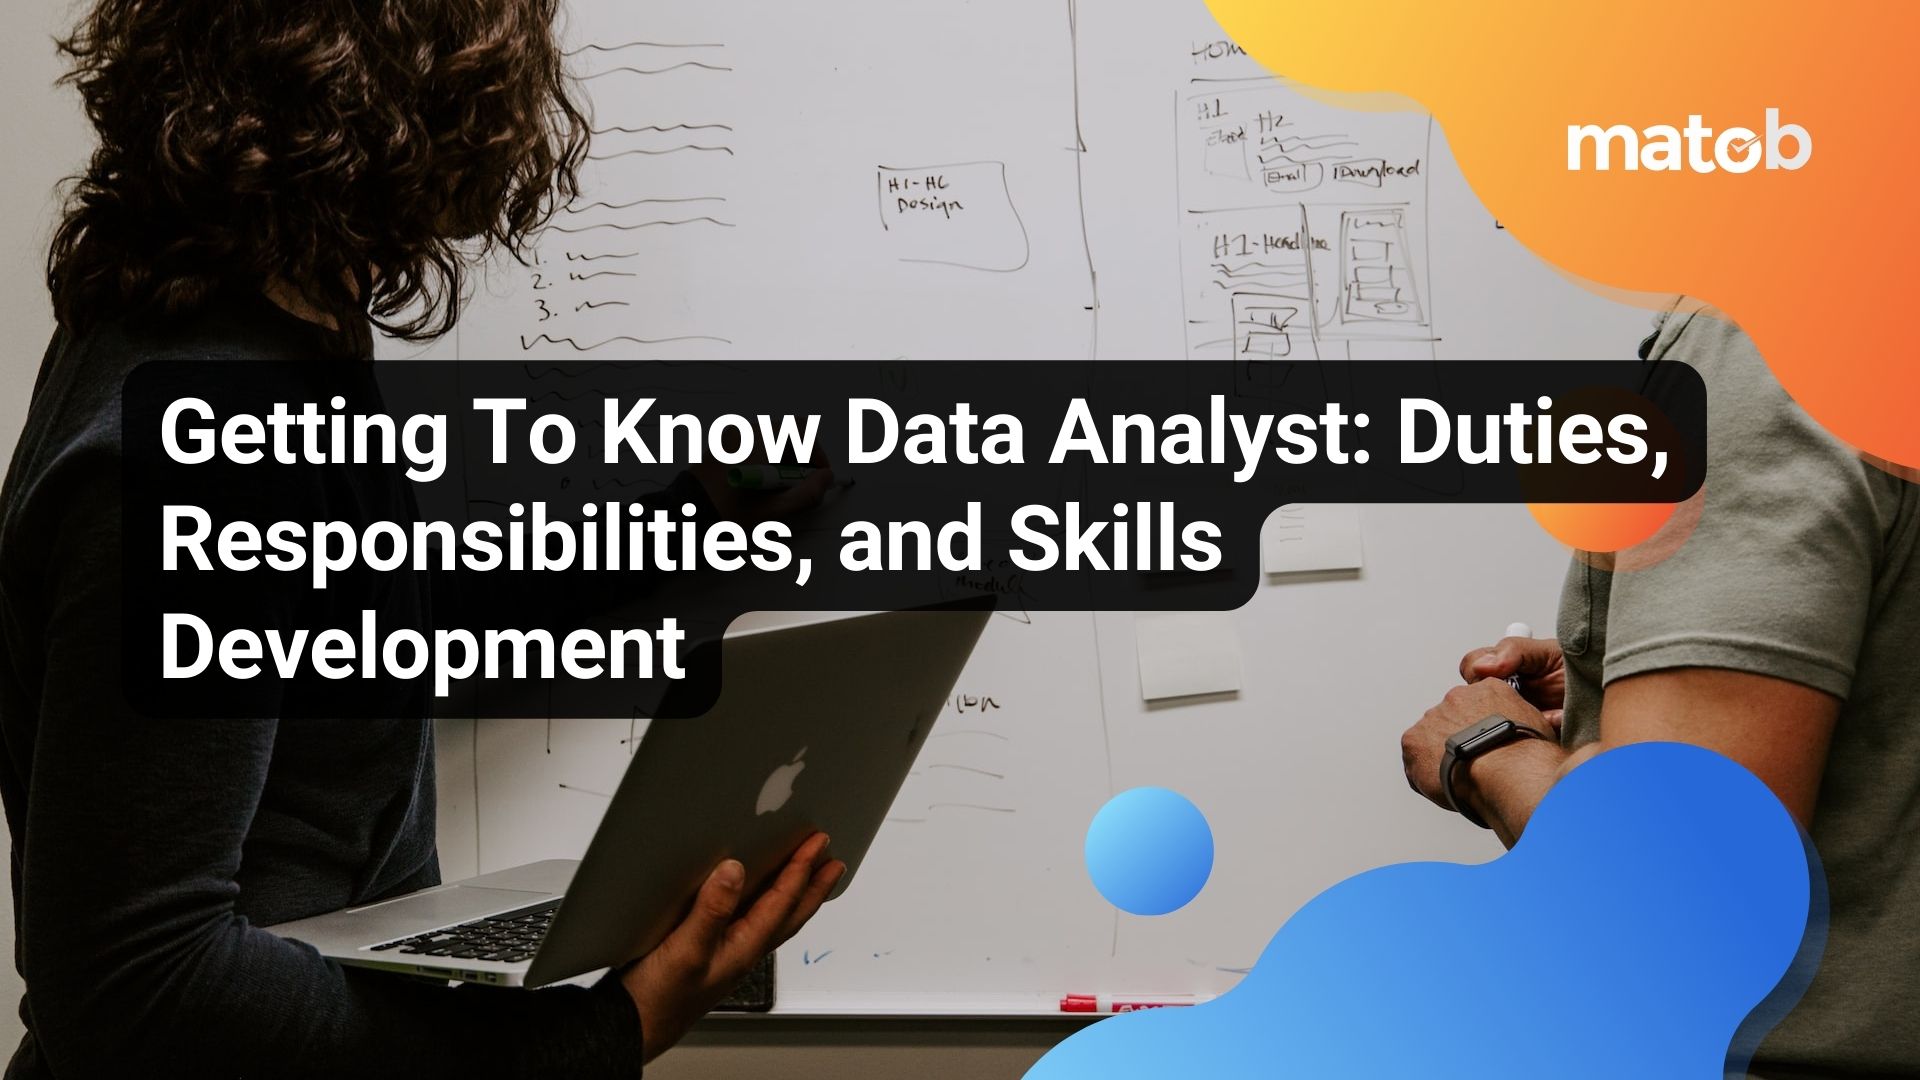 Getting To Know Data Analyst: Duties, Responsibilities, and Skills Development